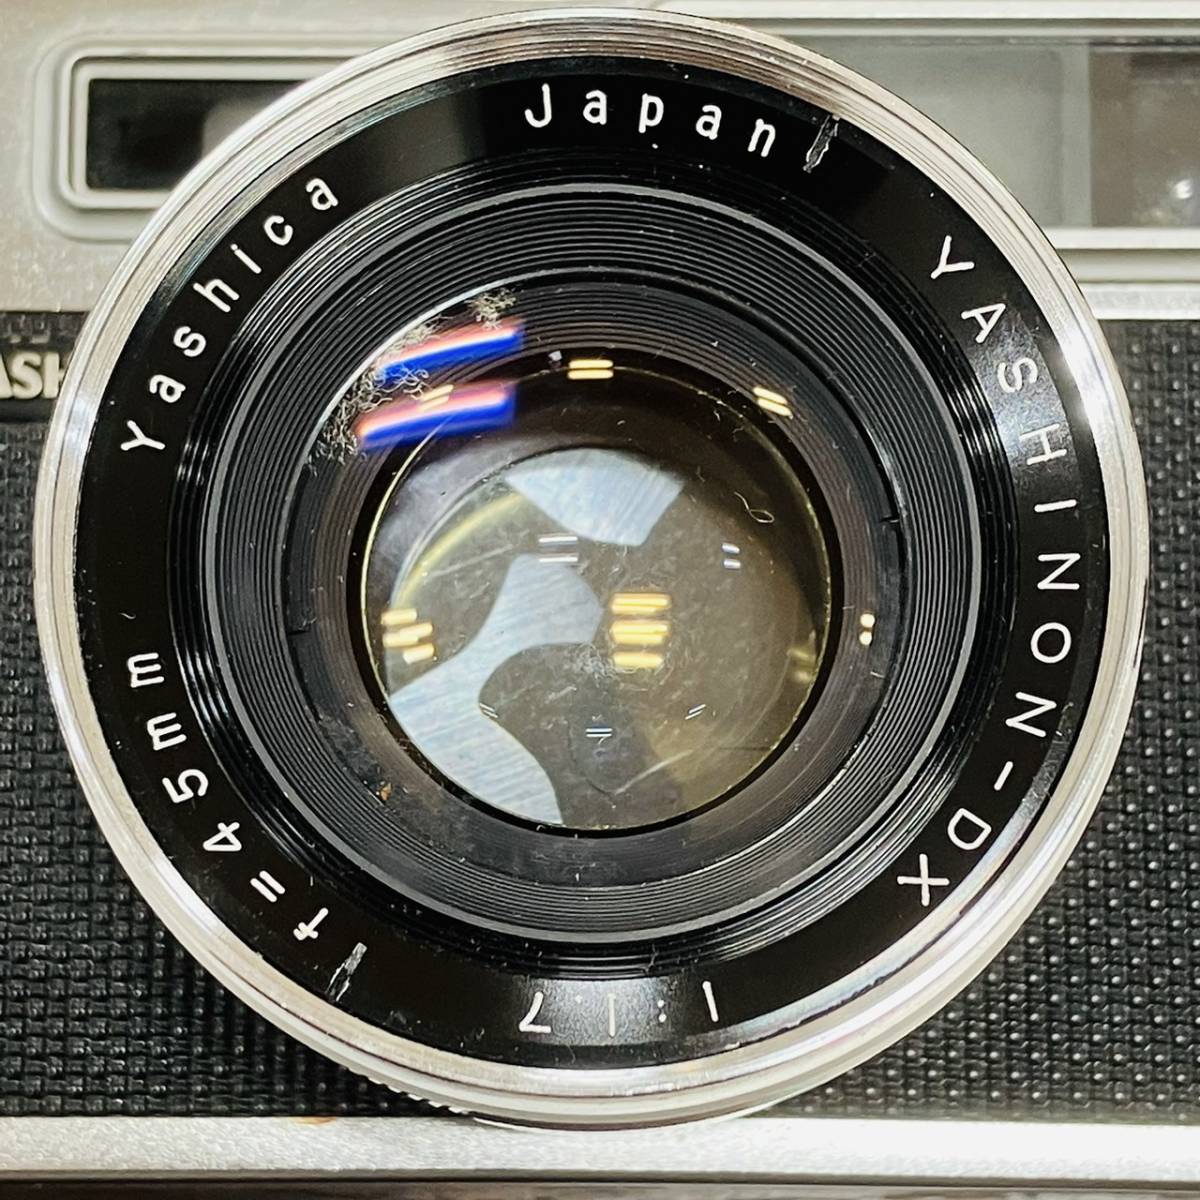 #4571*YASHICA ELECTRO35 Yashica электро 35 компакт-камера с футляром Japan f=45mm 1:1,7 YASHINON-DX работоспособность не проверялась * текущее состояние хранение товар 